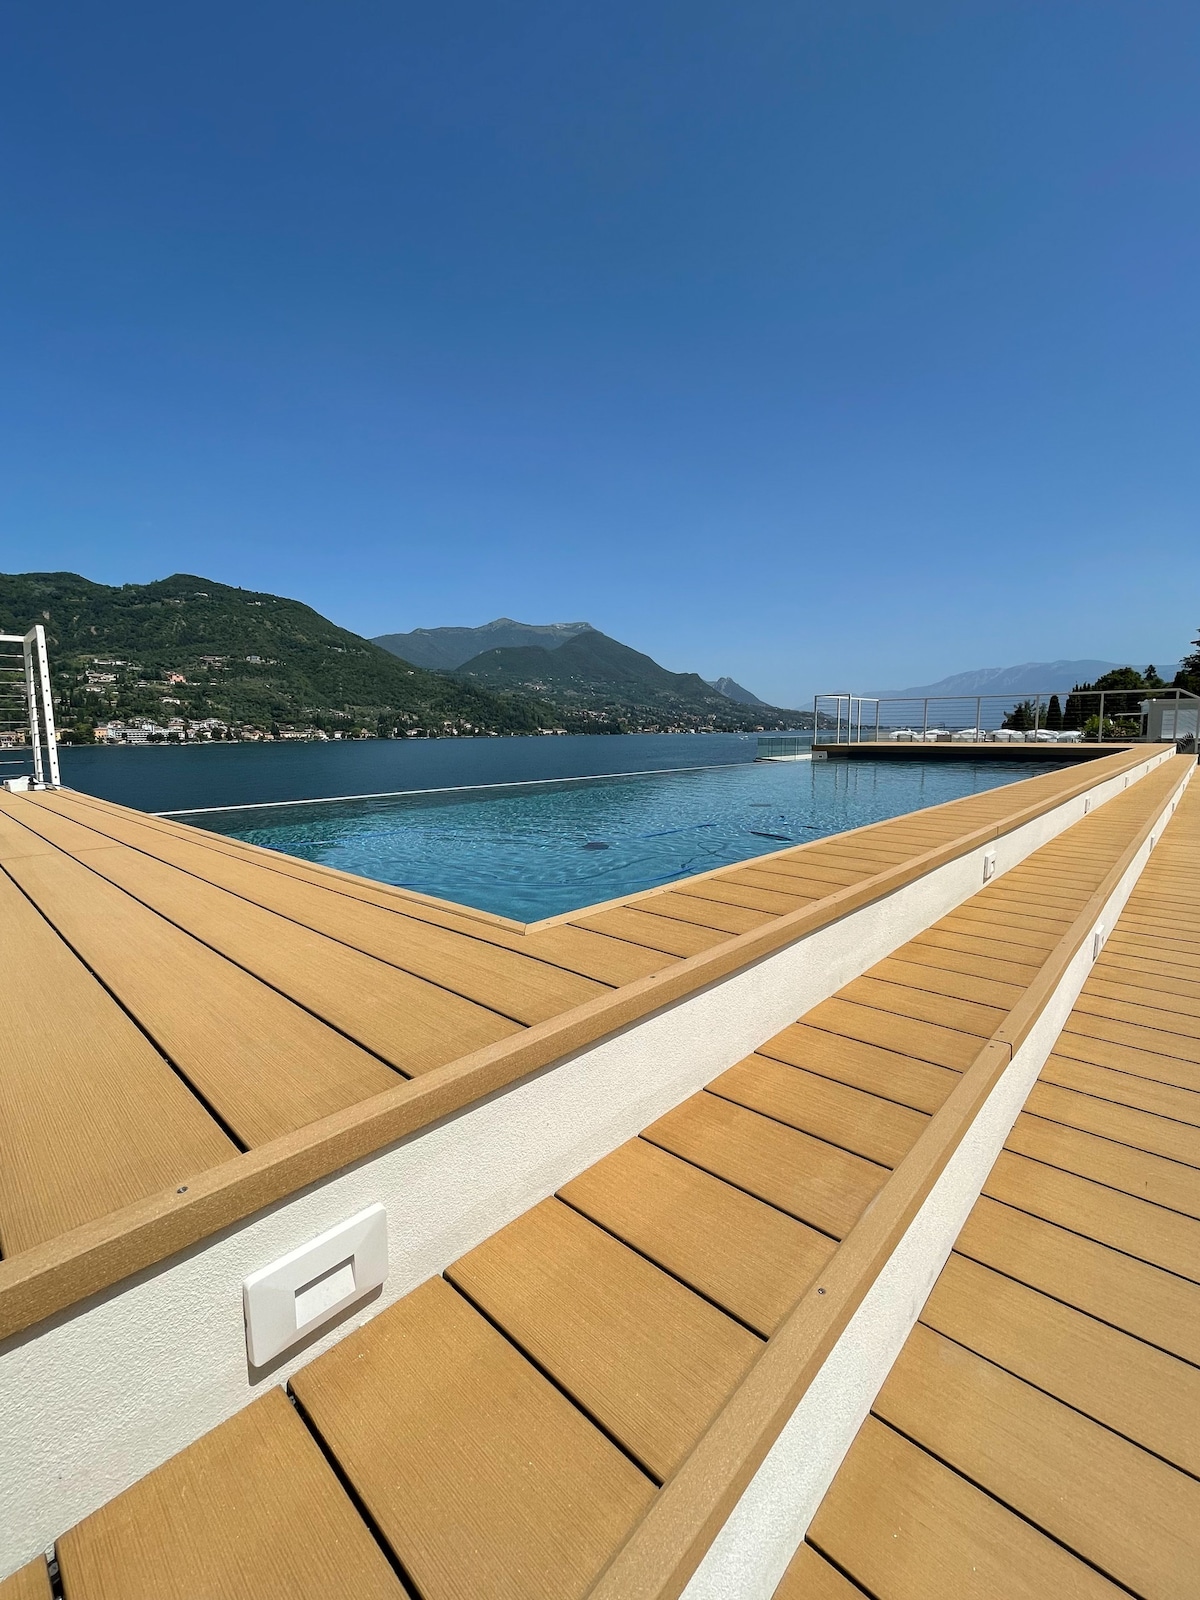 Lac de Garde : locations de vacances et logements - Italie | Airbnb